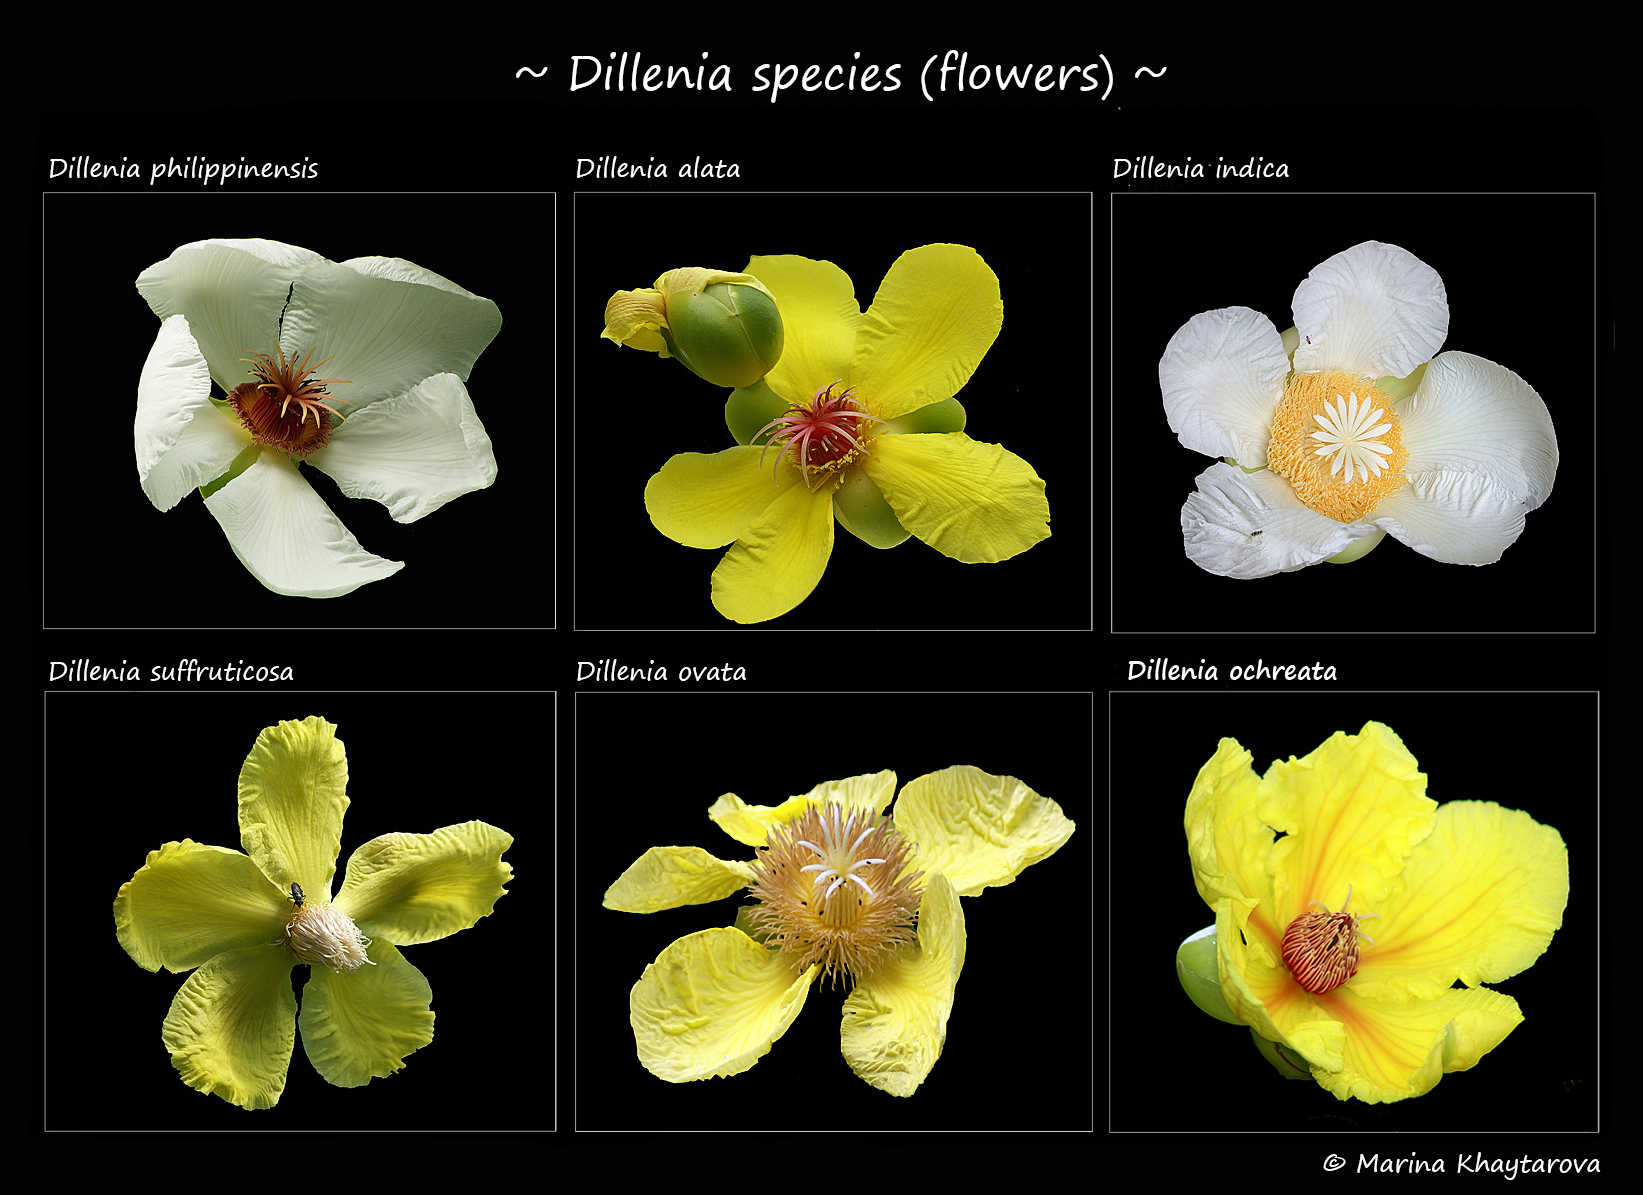 Dillenia species (flowers)